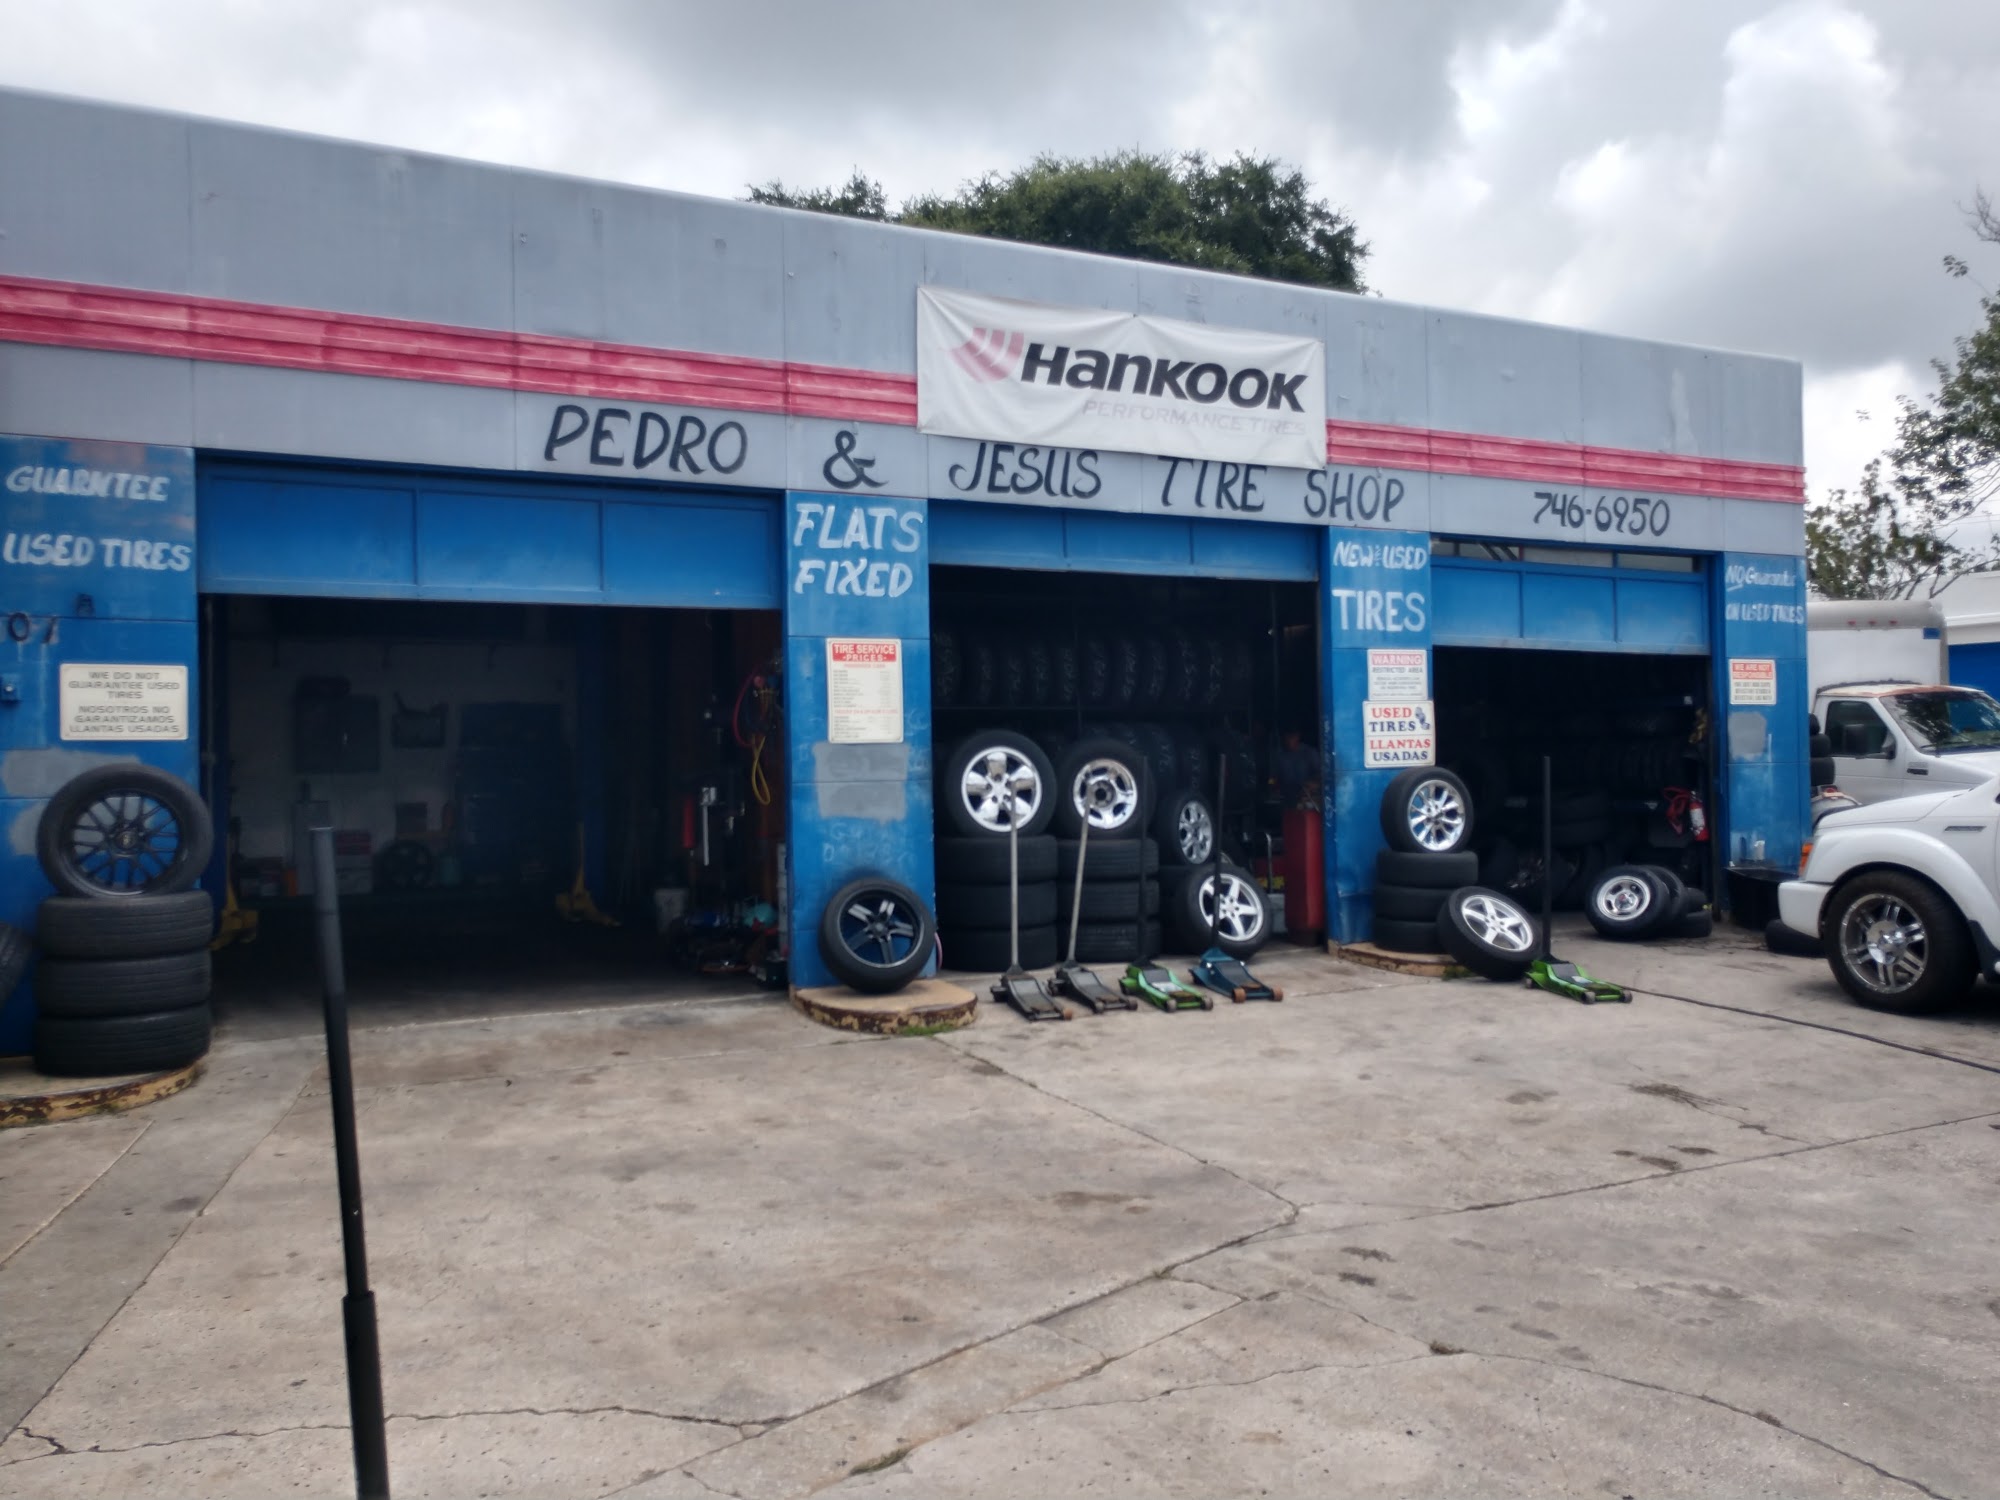 Pedro & Jesus Tire Shop Inc